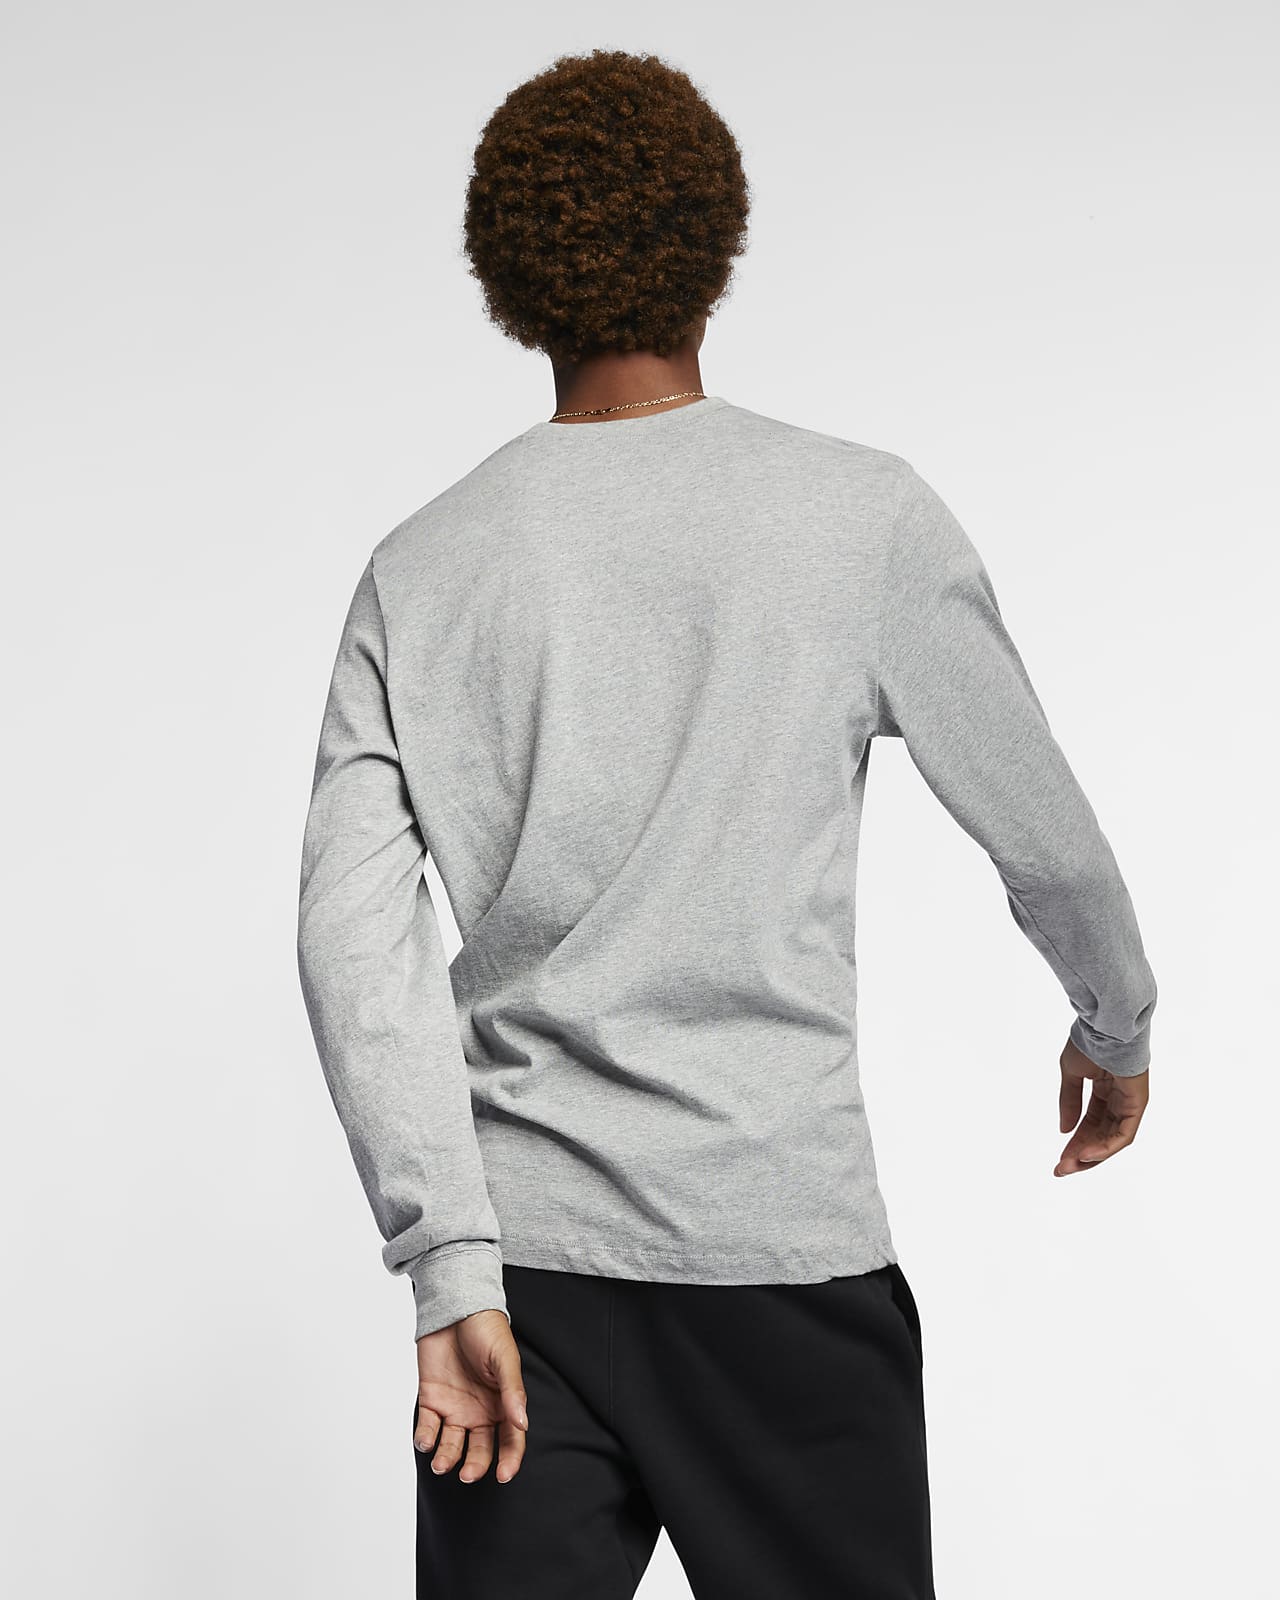 Nike x Future Movement Long-Sleeve T-Shirt.